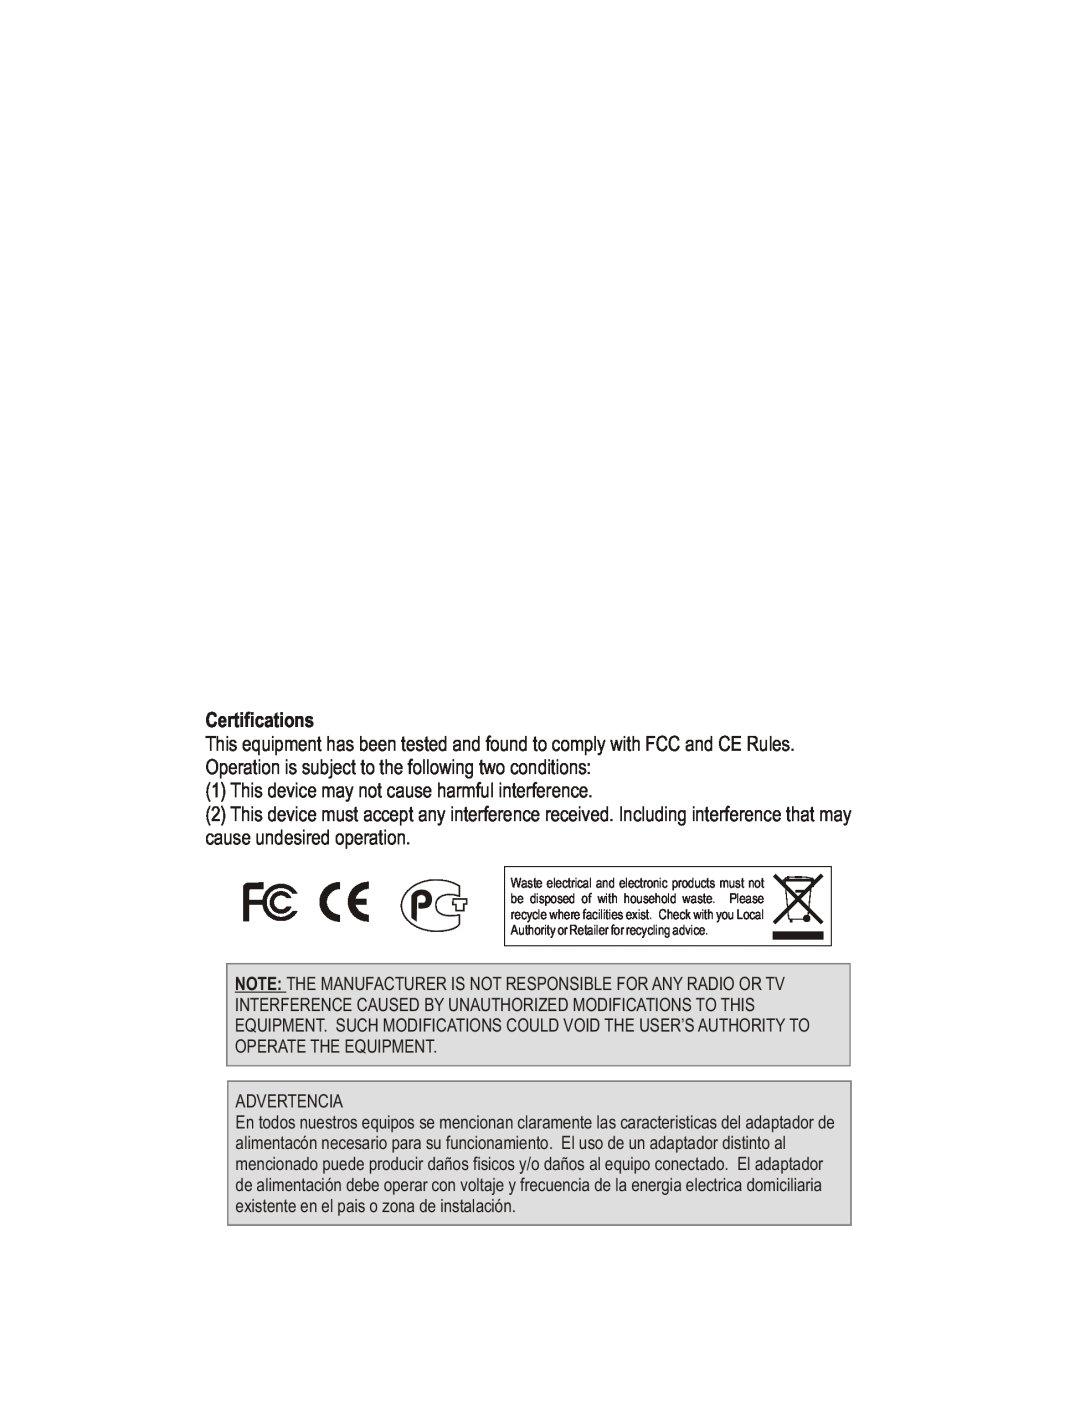 TRENDnet S800i manual Certifications 